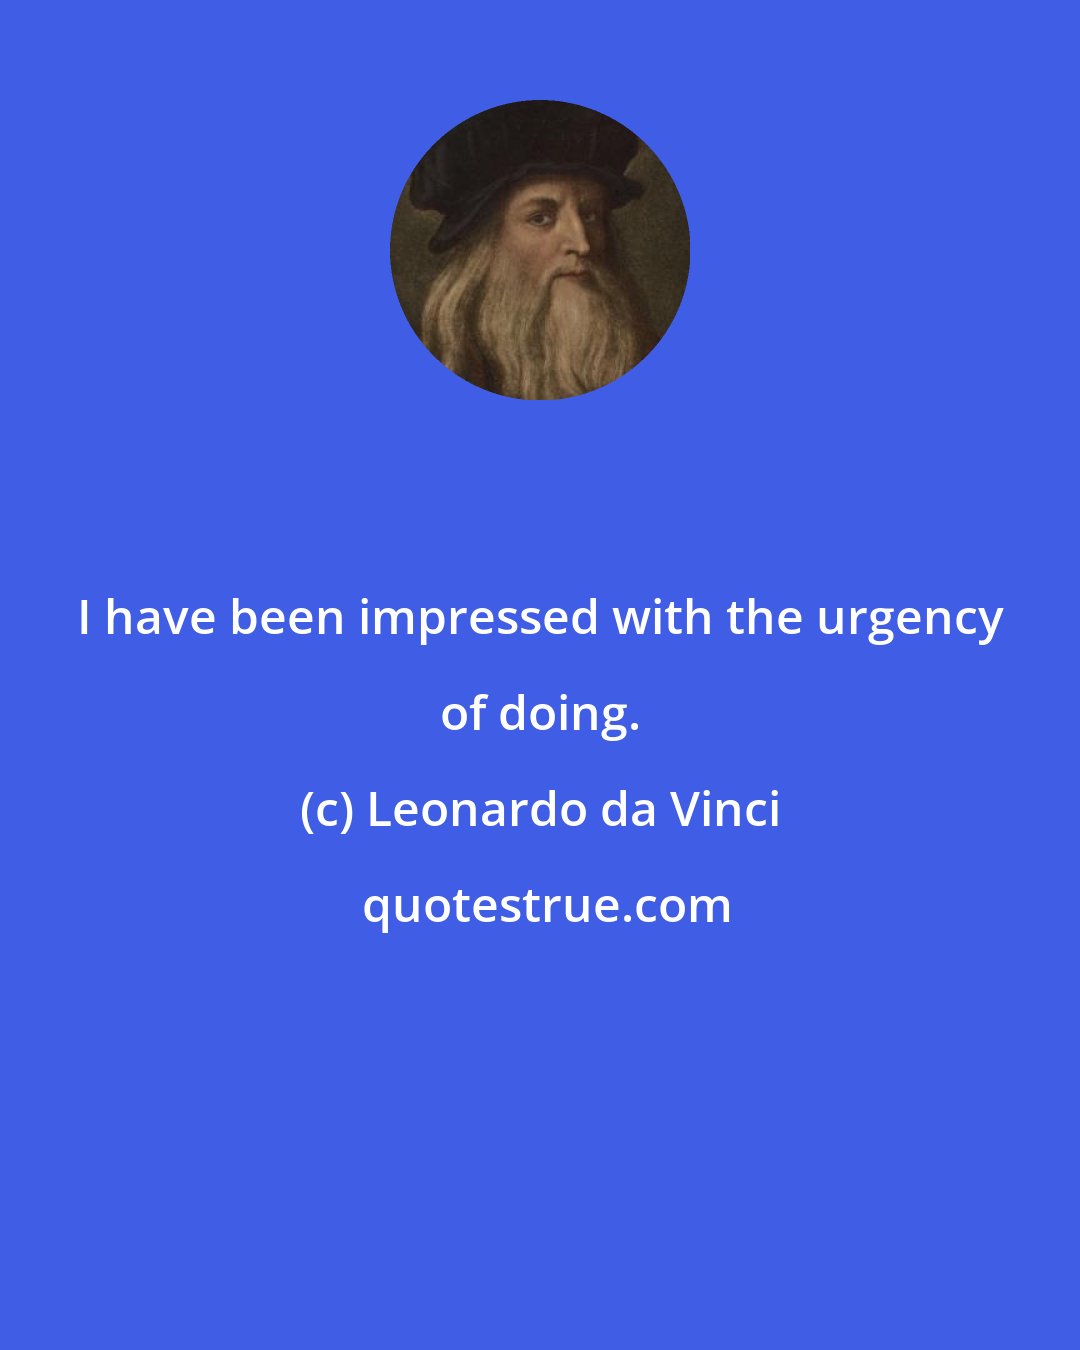 Leonardo da Vinci: I have been impressed with the urgency of doing.